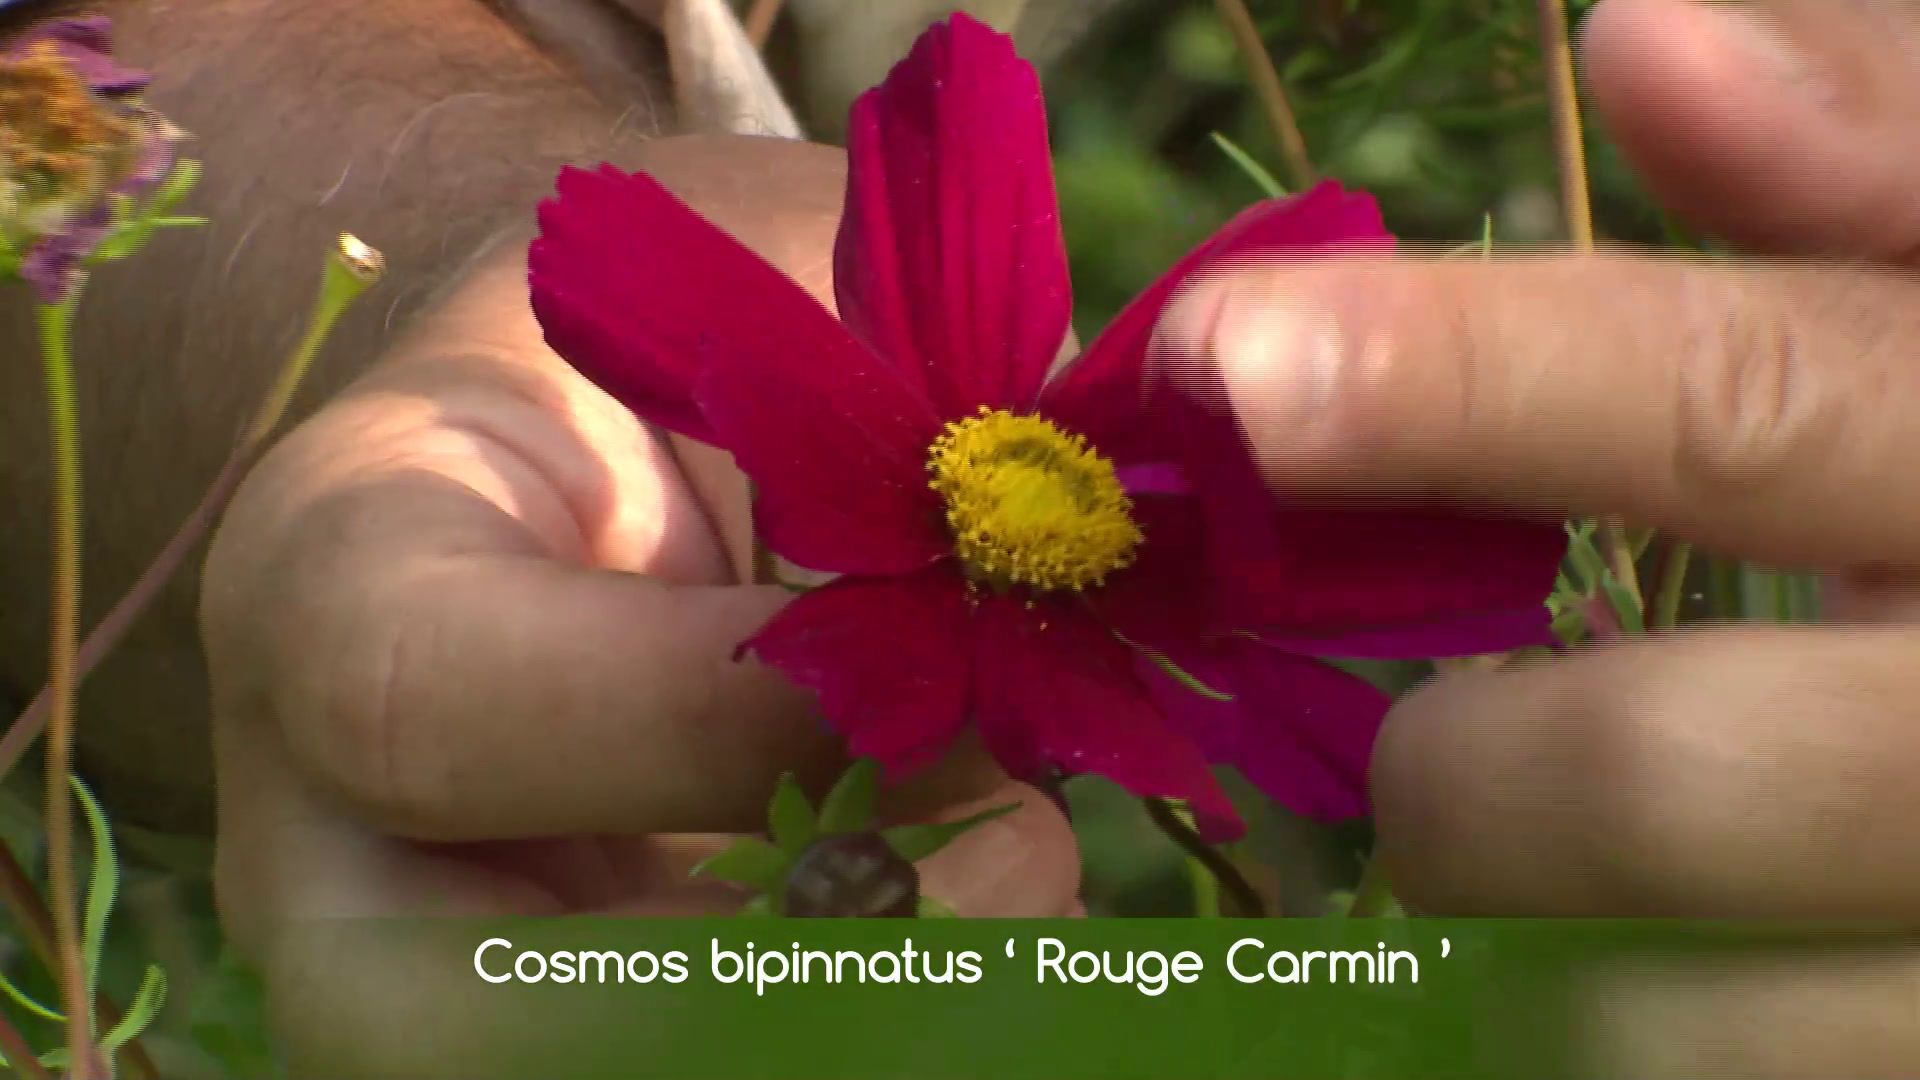 Le Cosmos bipinnatus 'Rouge Carmin' flambloie au jardin - rtbf.be